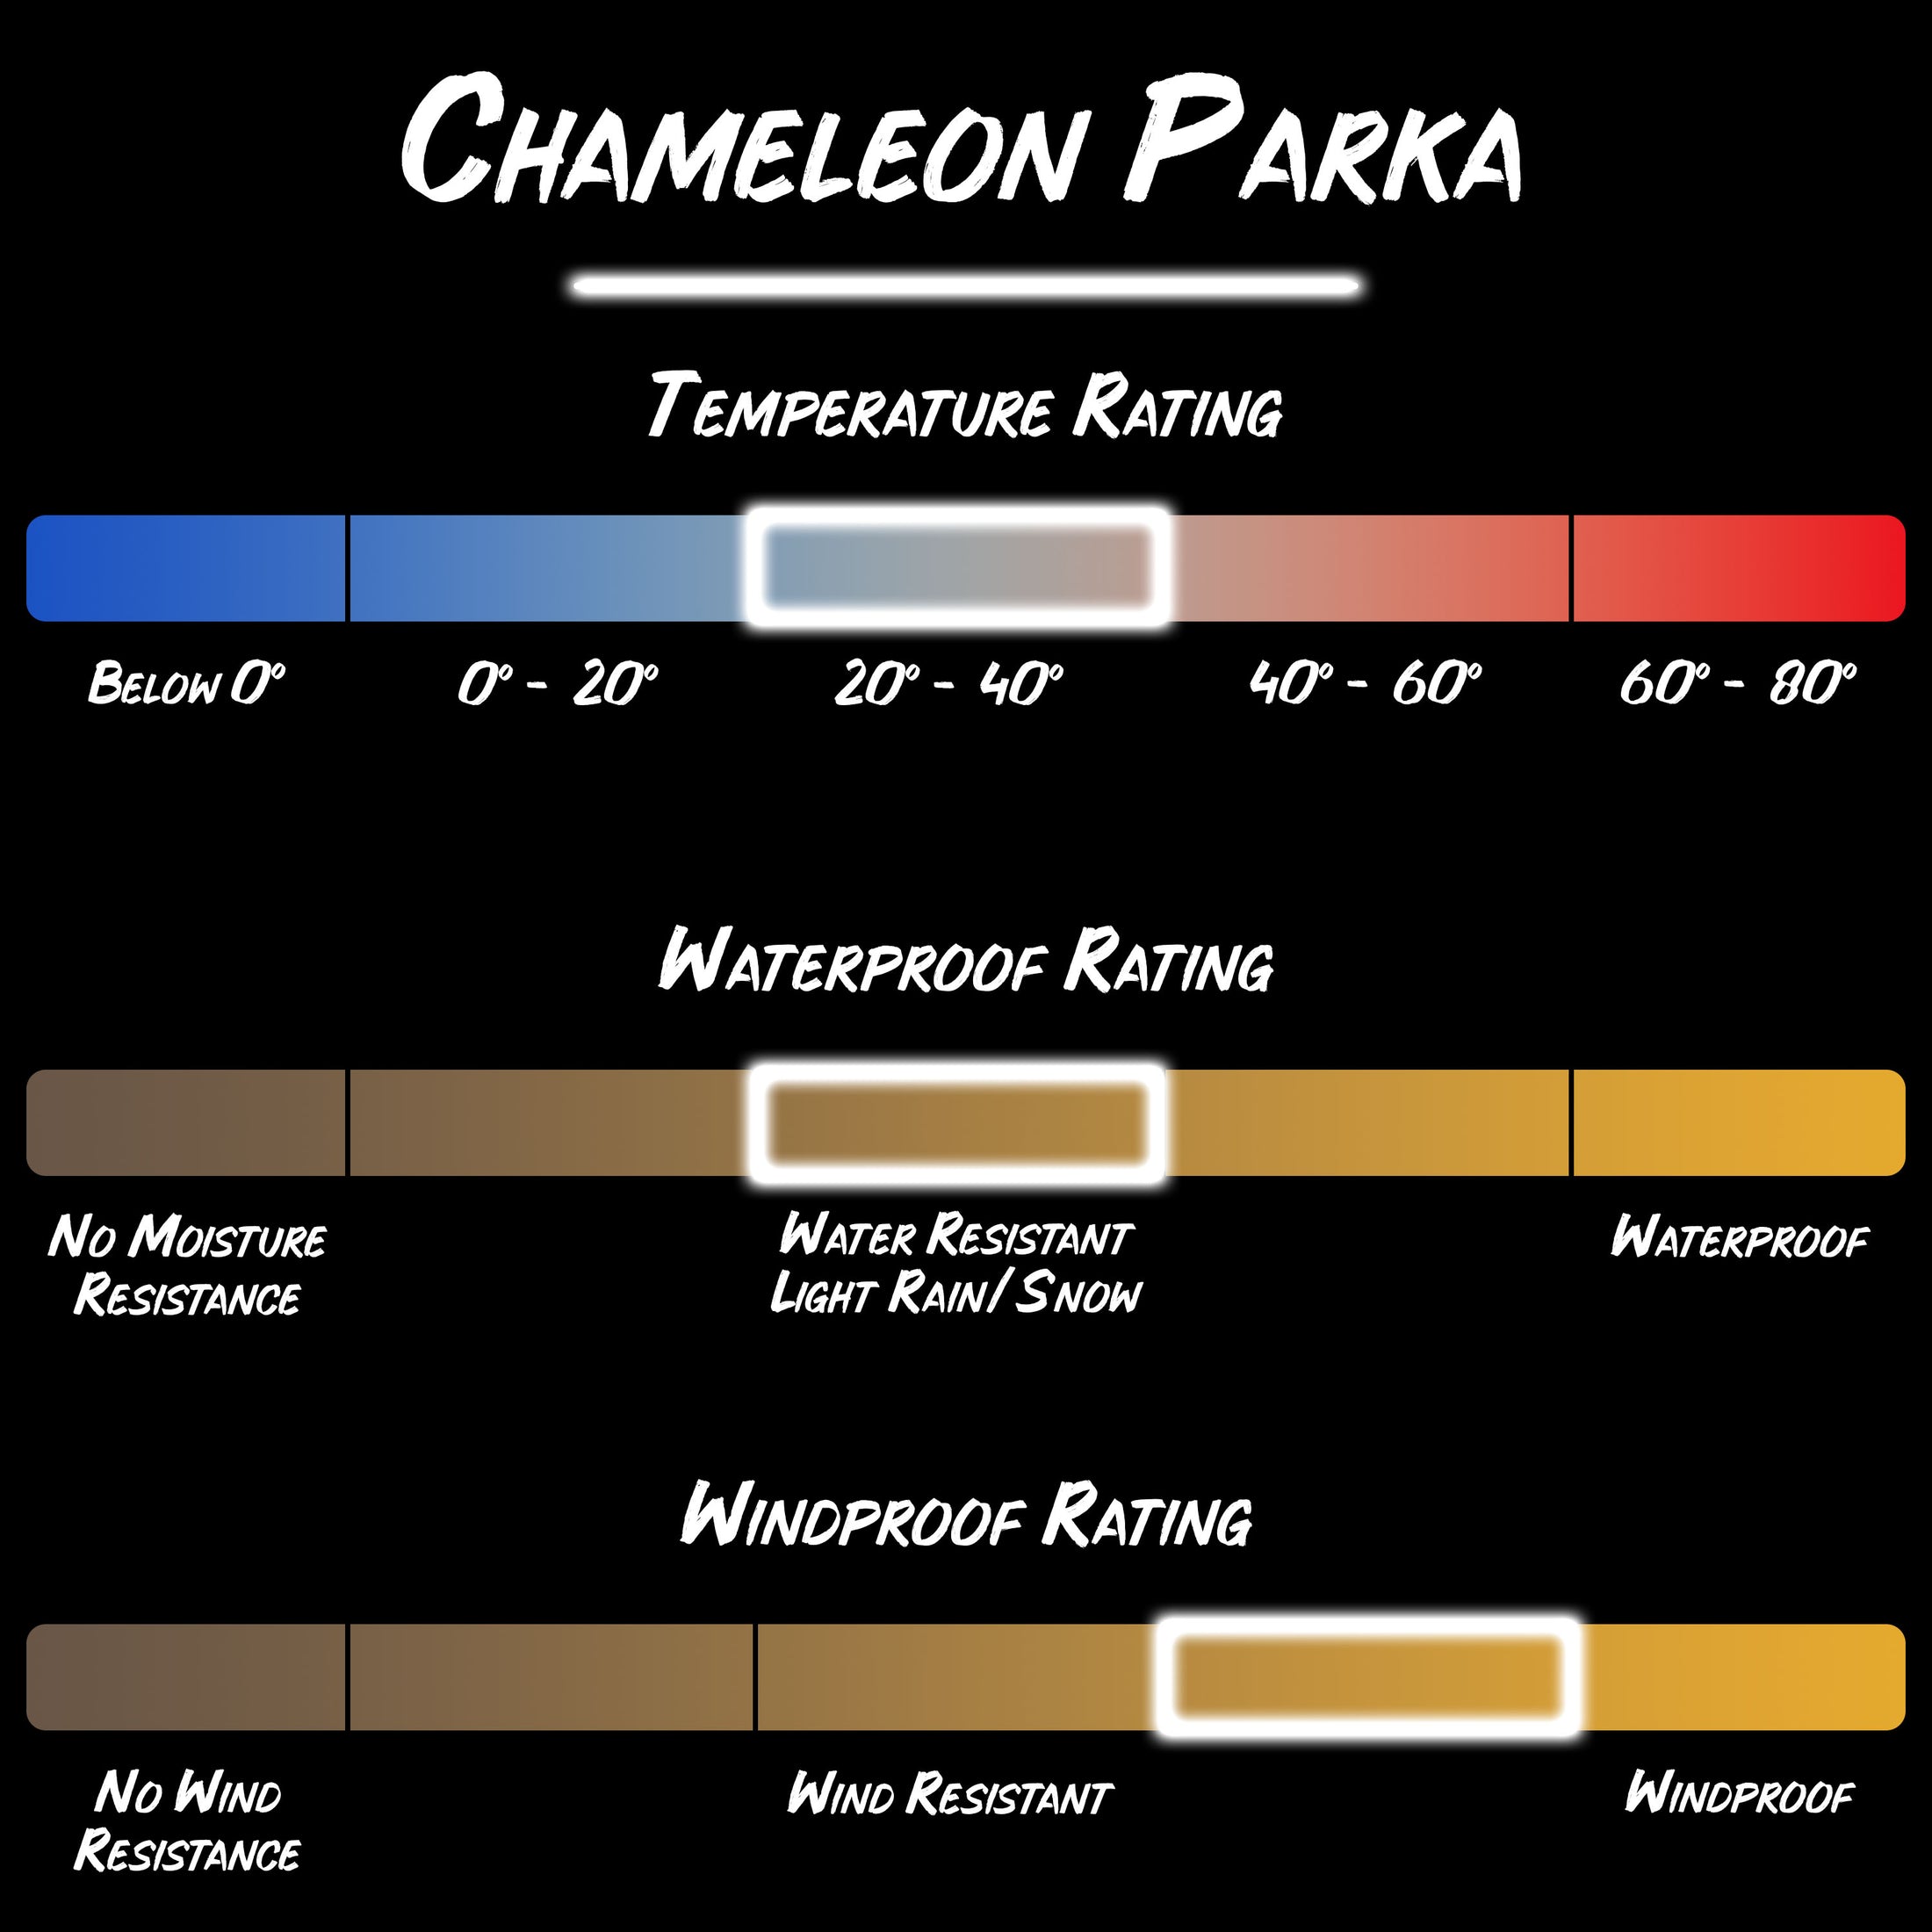 Gamehide chameleon parka product specfications